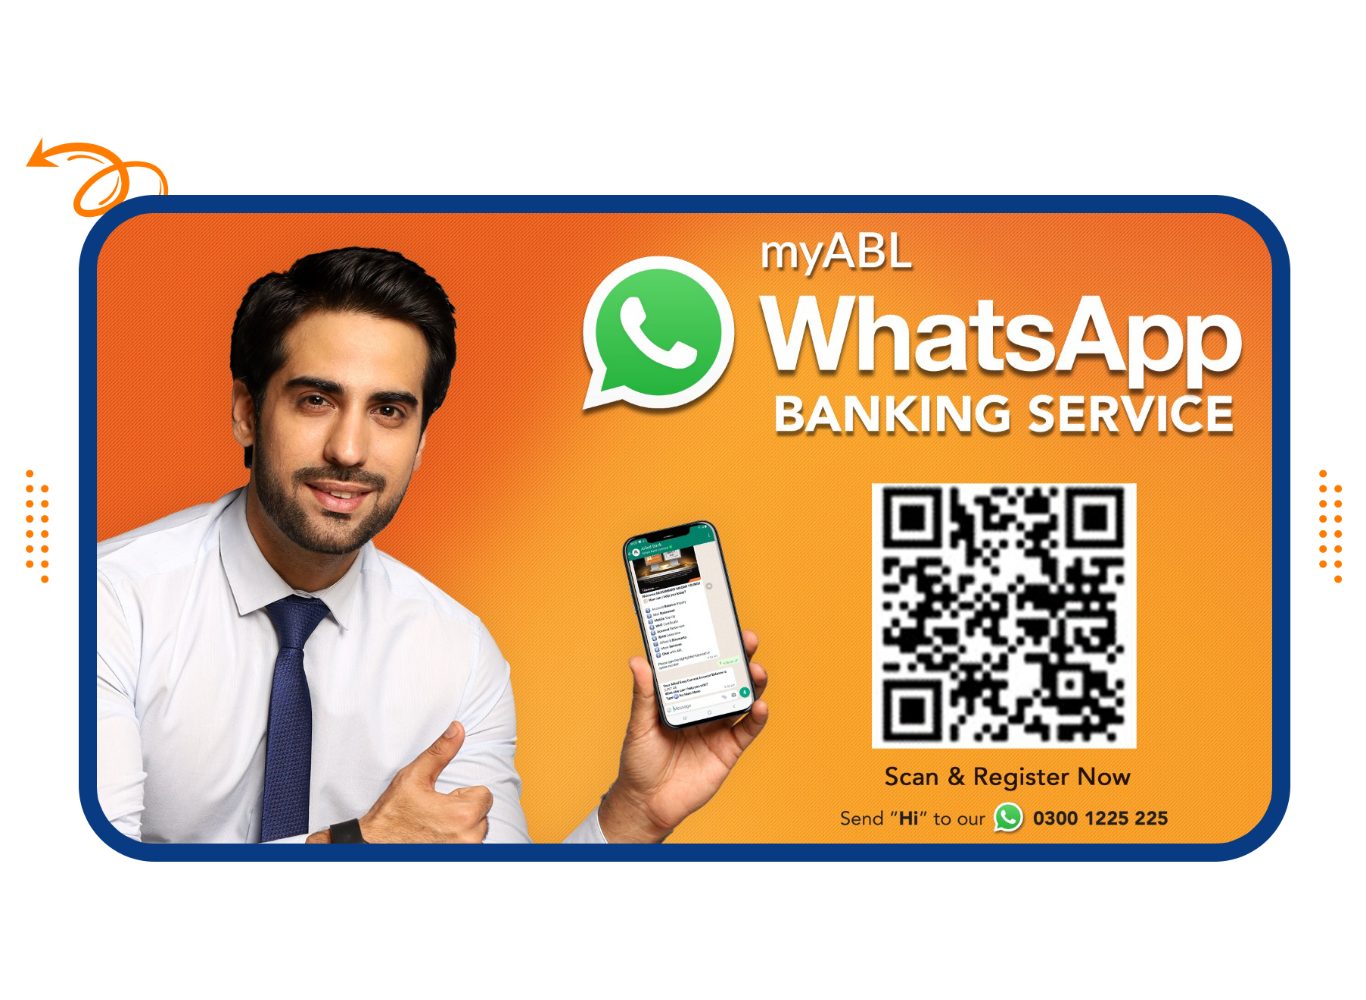 myABL WhatsApp Banking